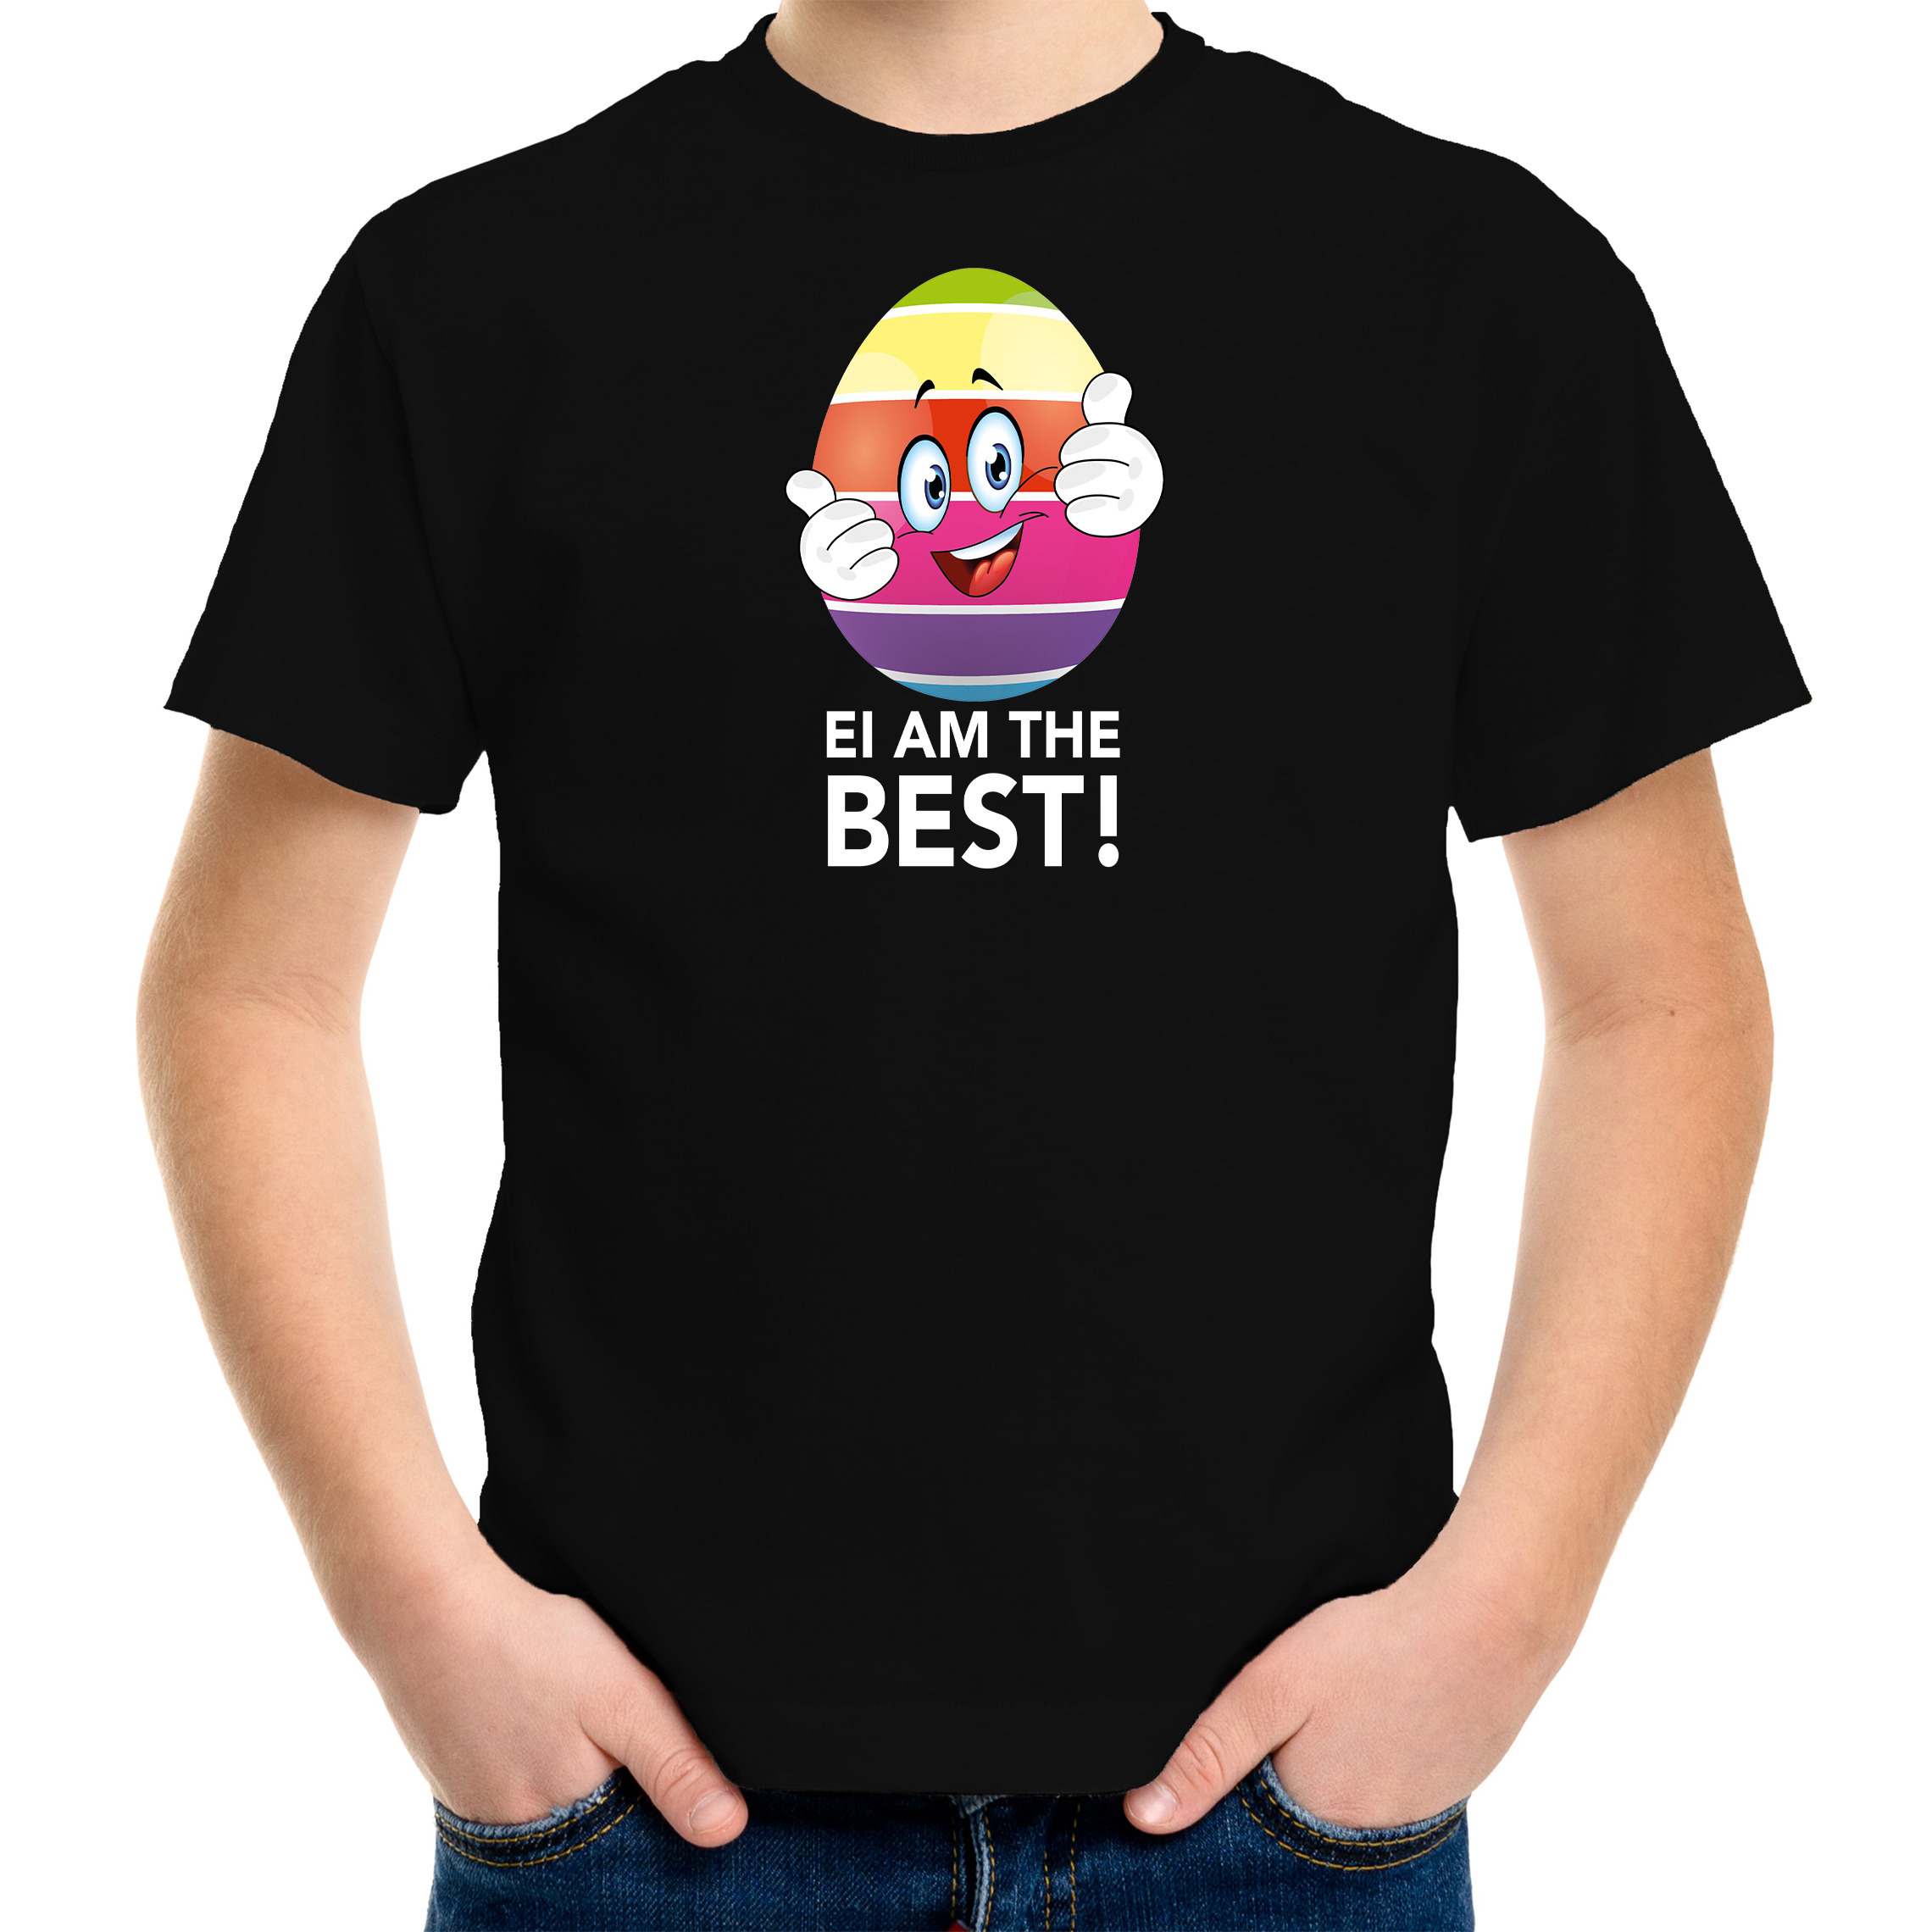 Vrolijk Paasei ei am the best t-shirt zwart voor kinderen Paas kleding-outfit